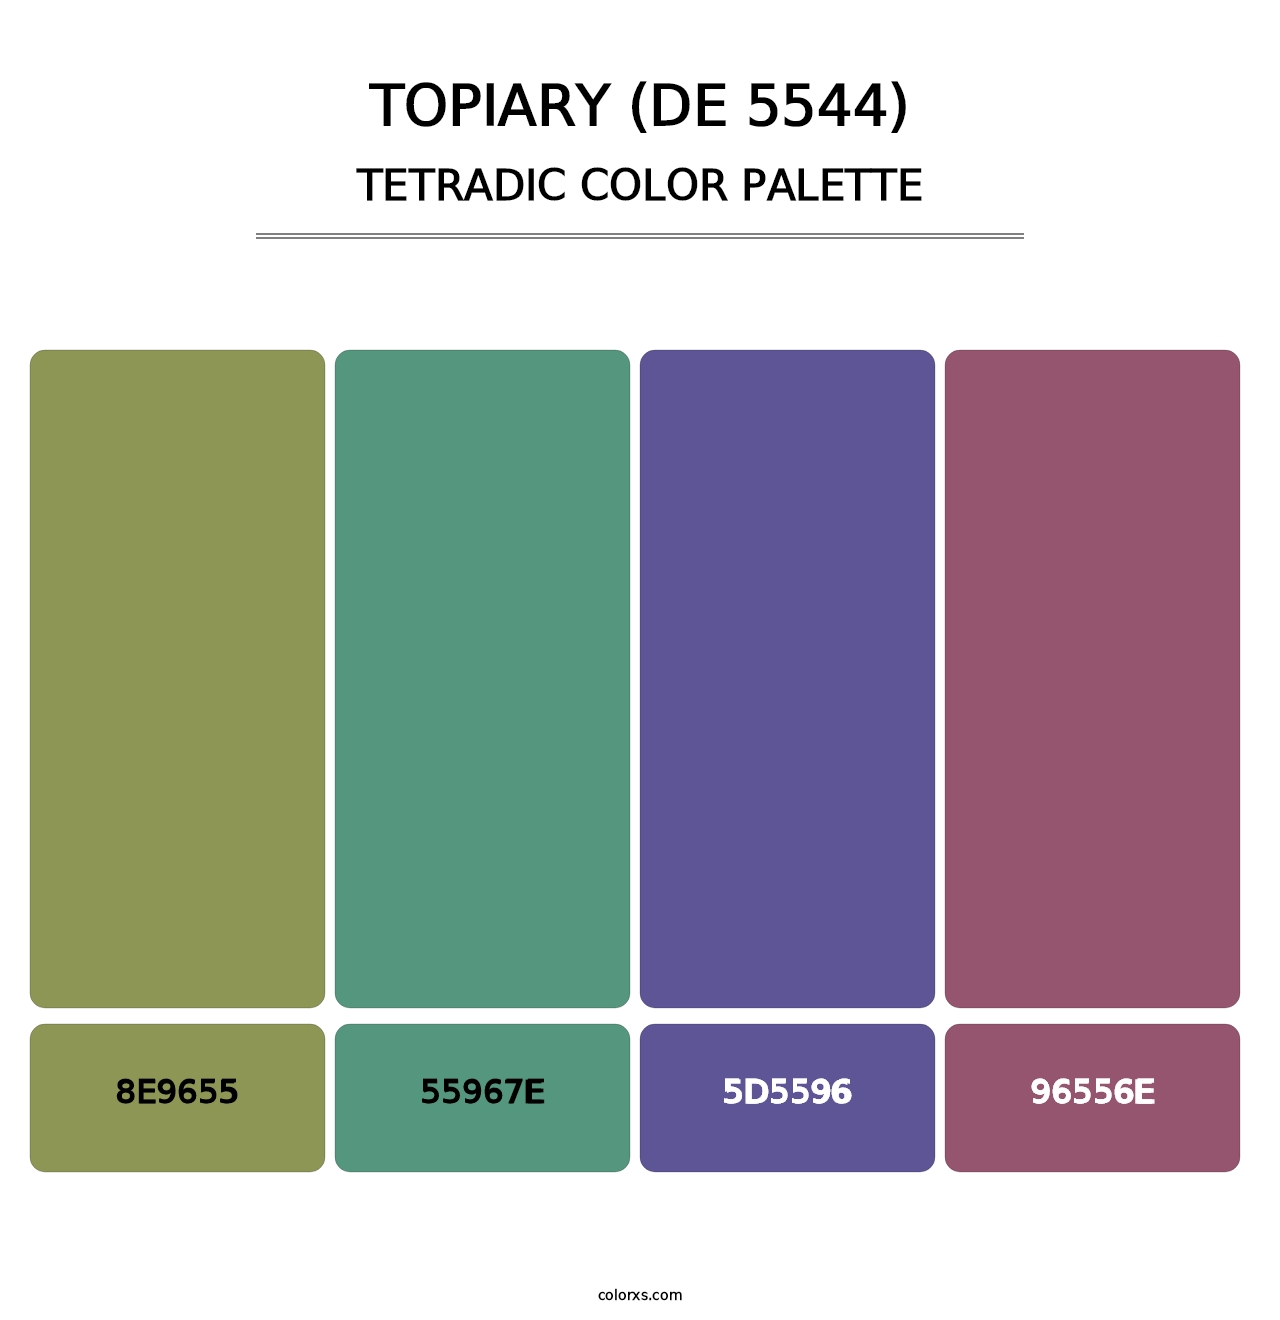 Topiary (DE 5544) - Tetradic Color Palette